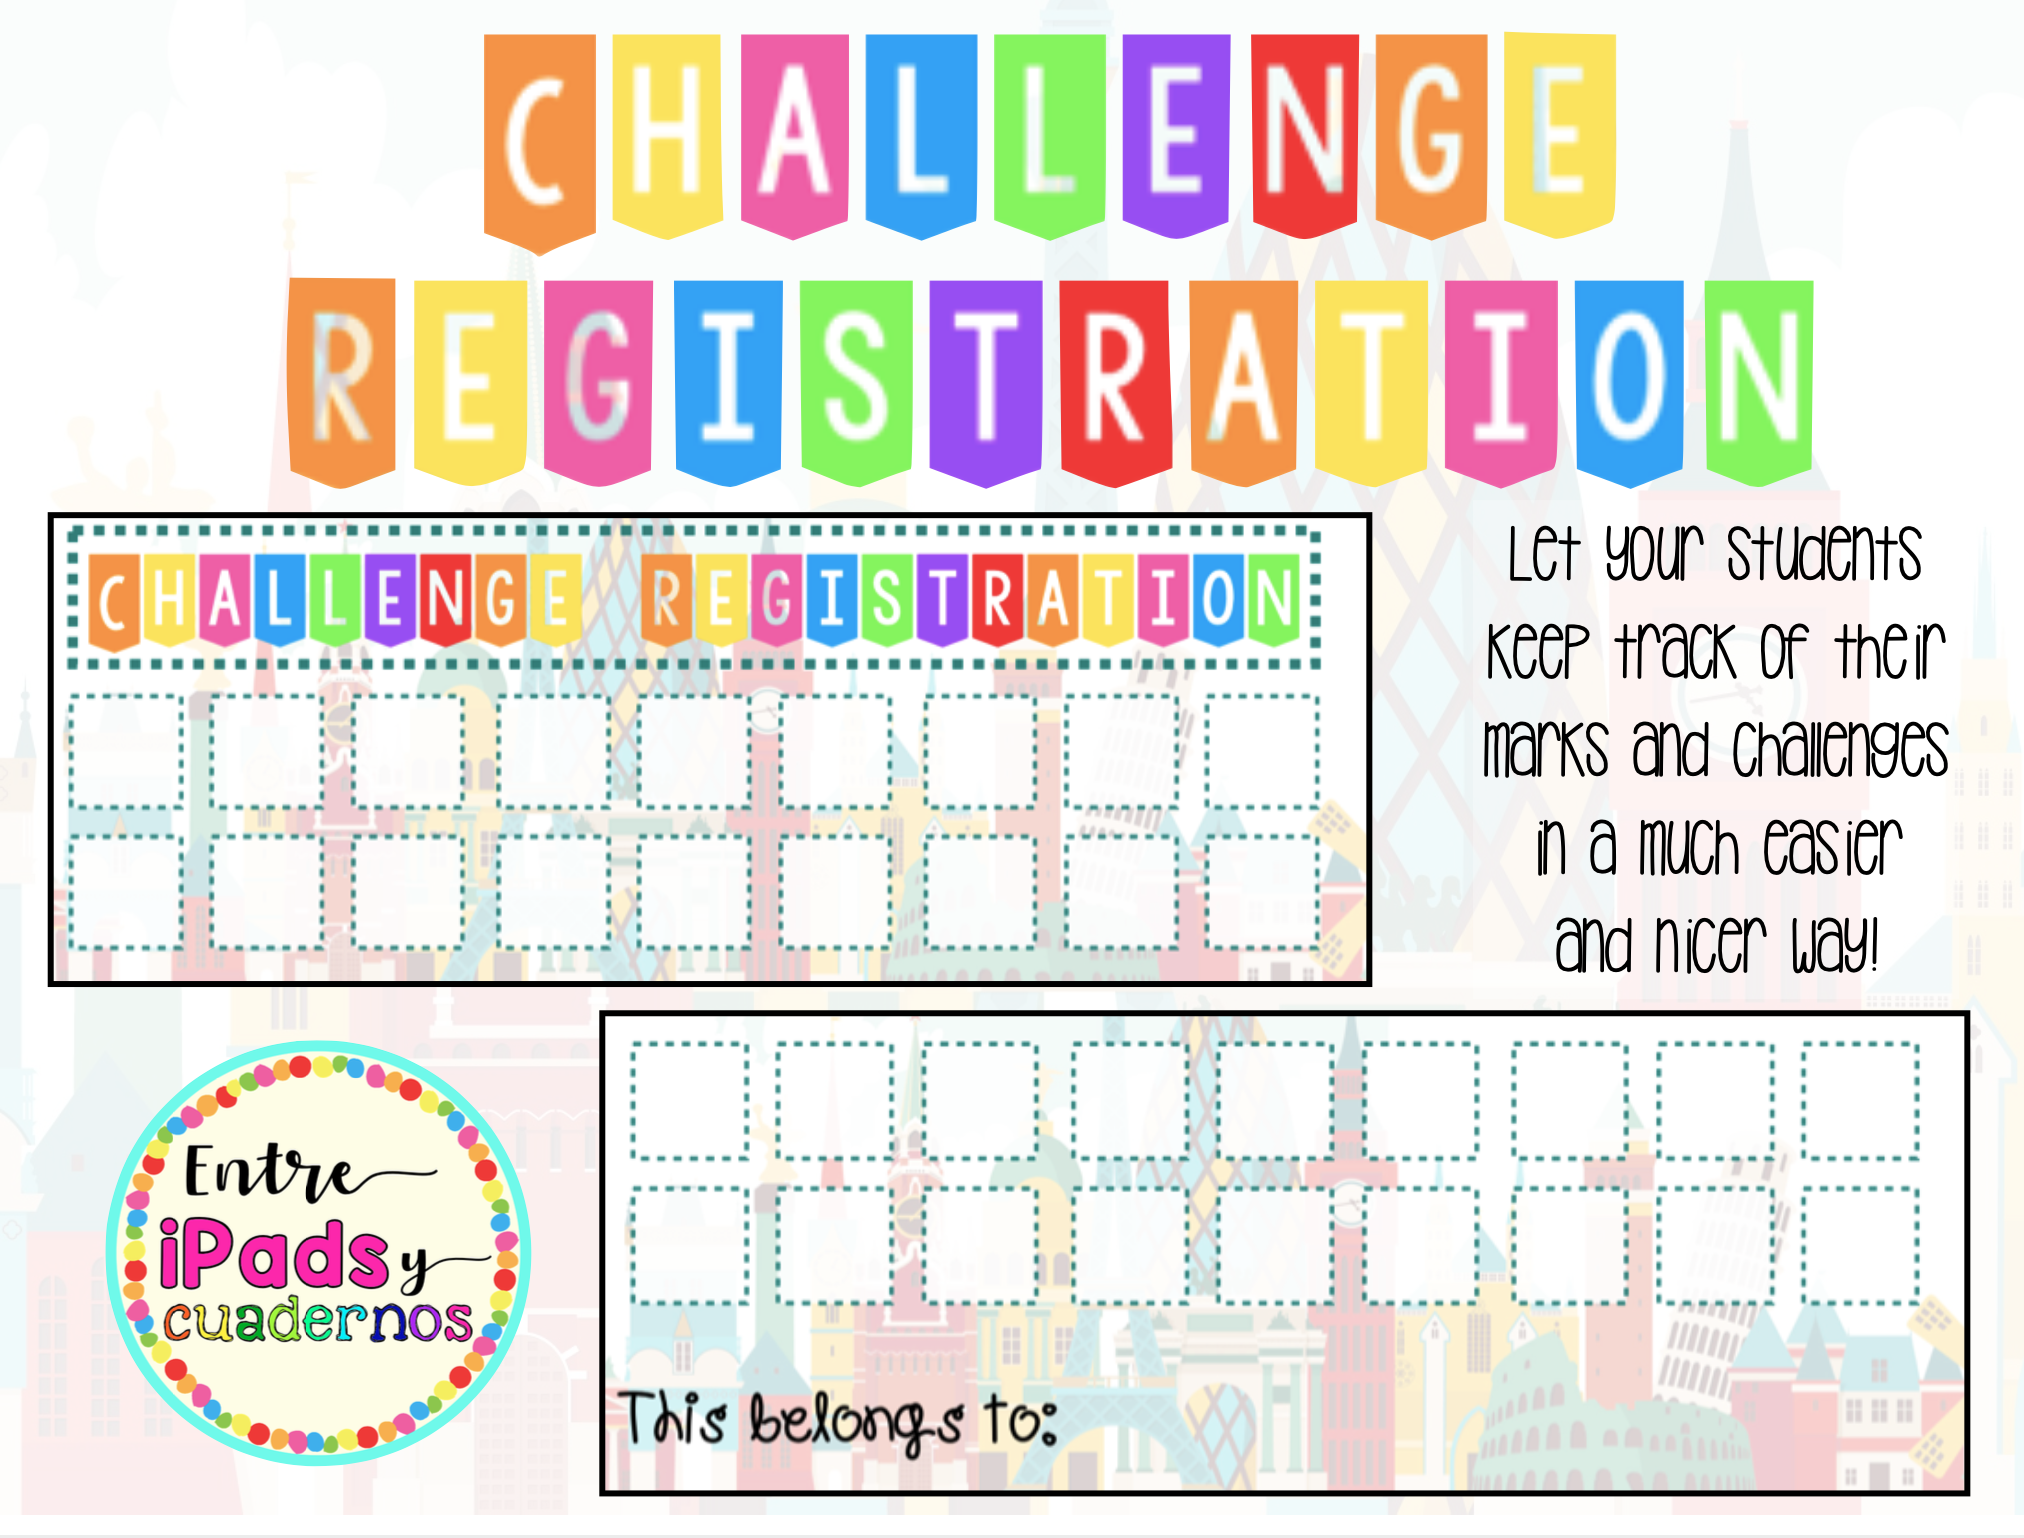 Challenge registration